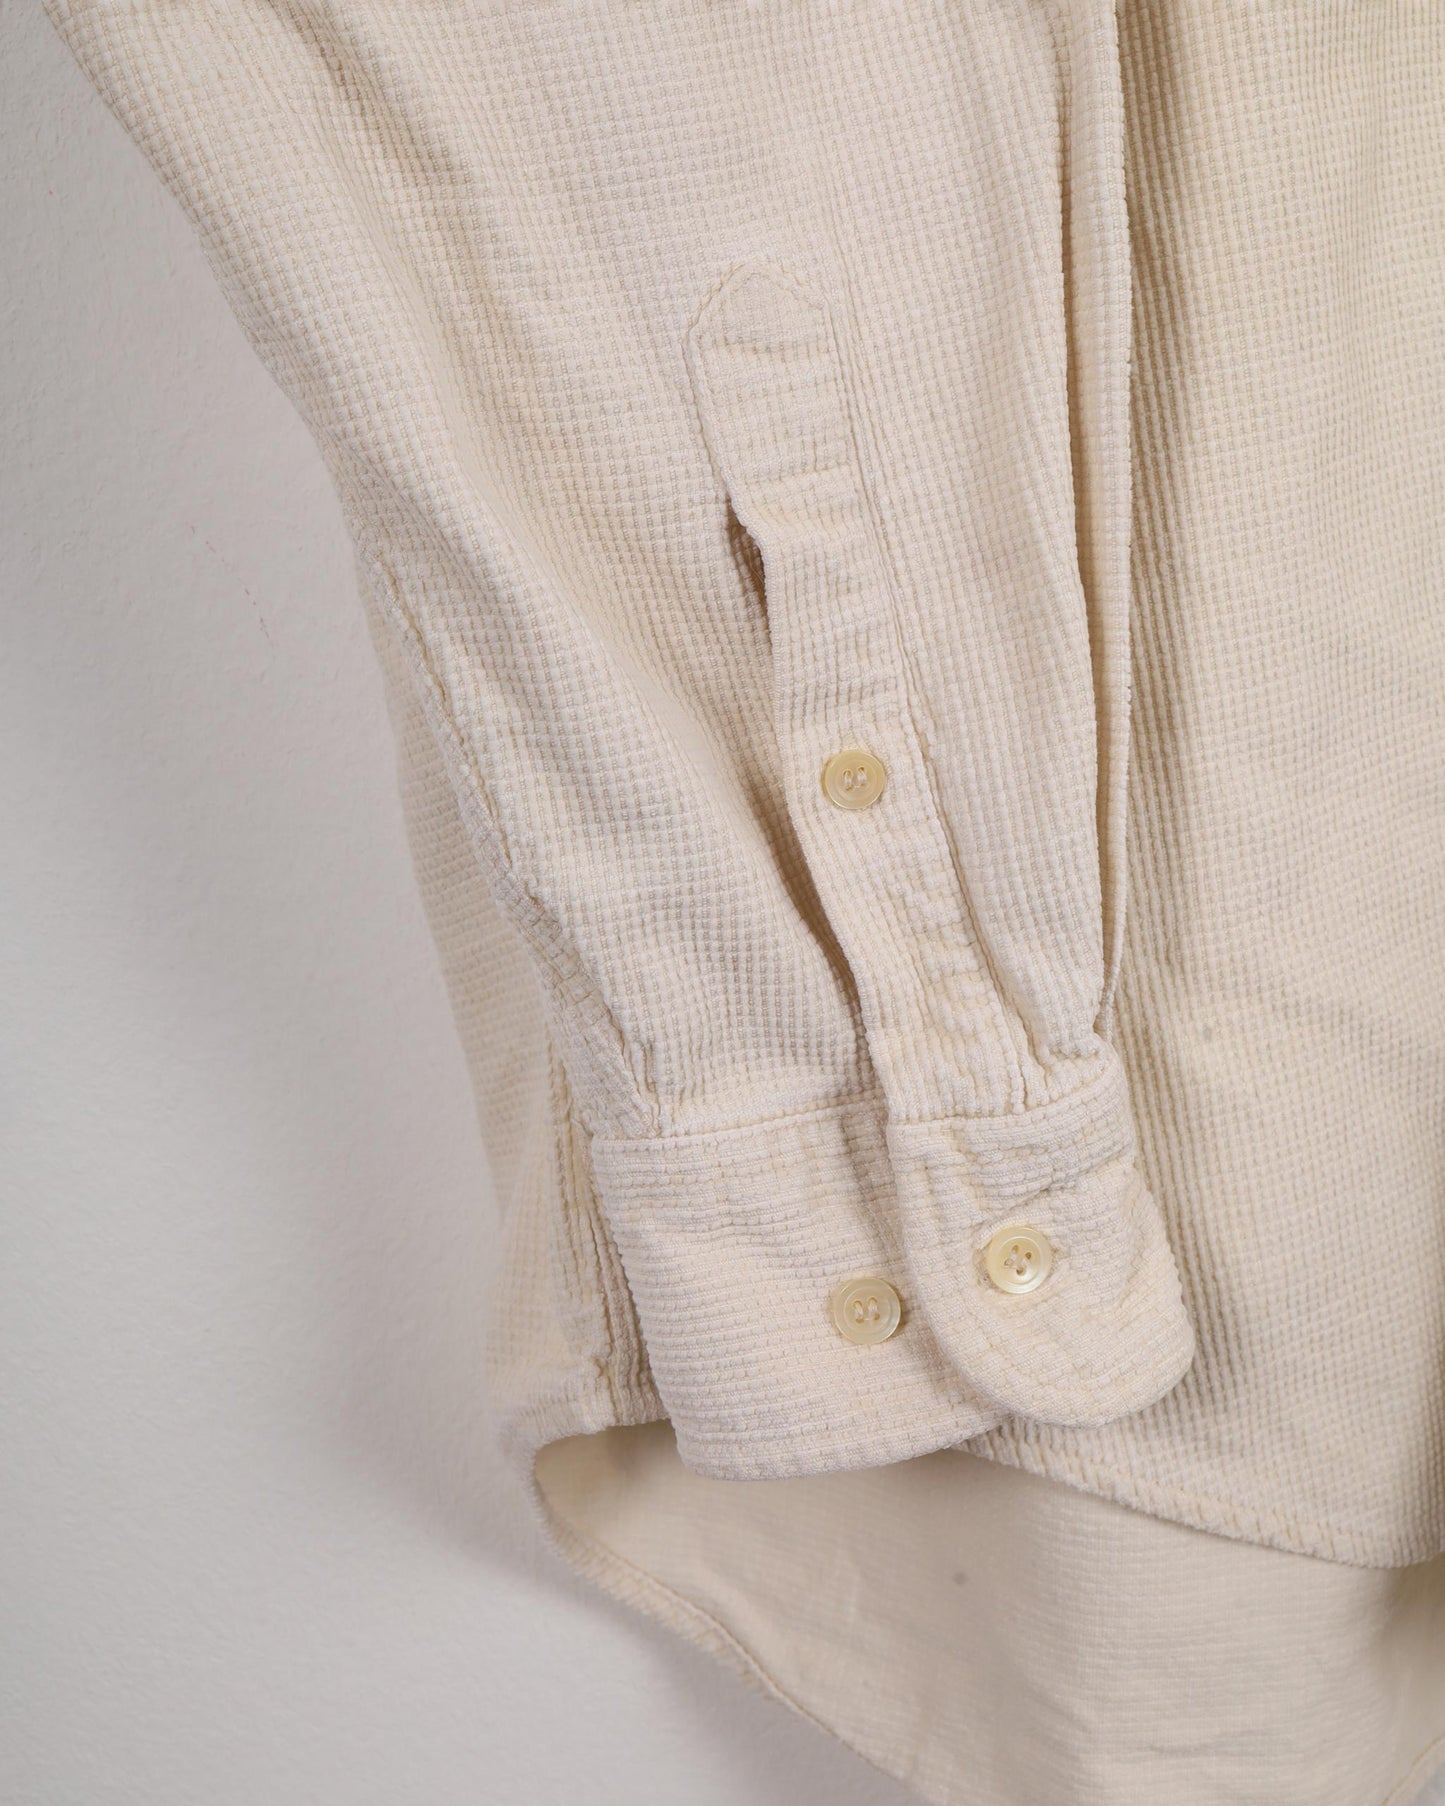 Camicia a maniche lunghe asimmetrica in cordoncino casual vintage Atwardson beige